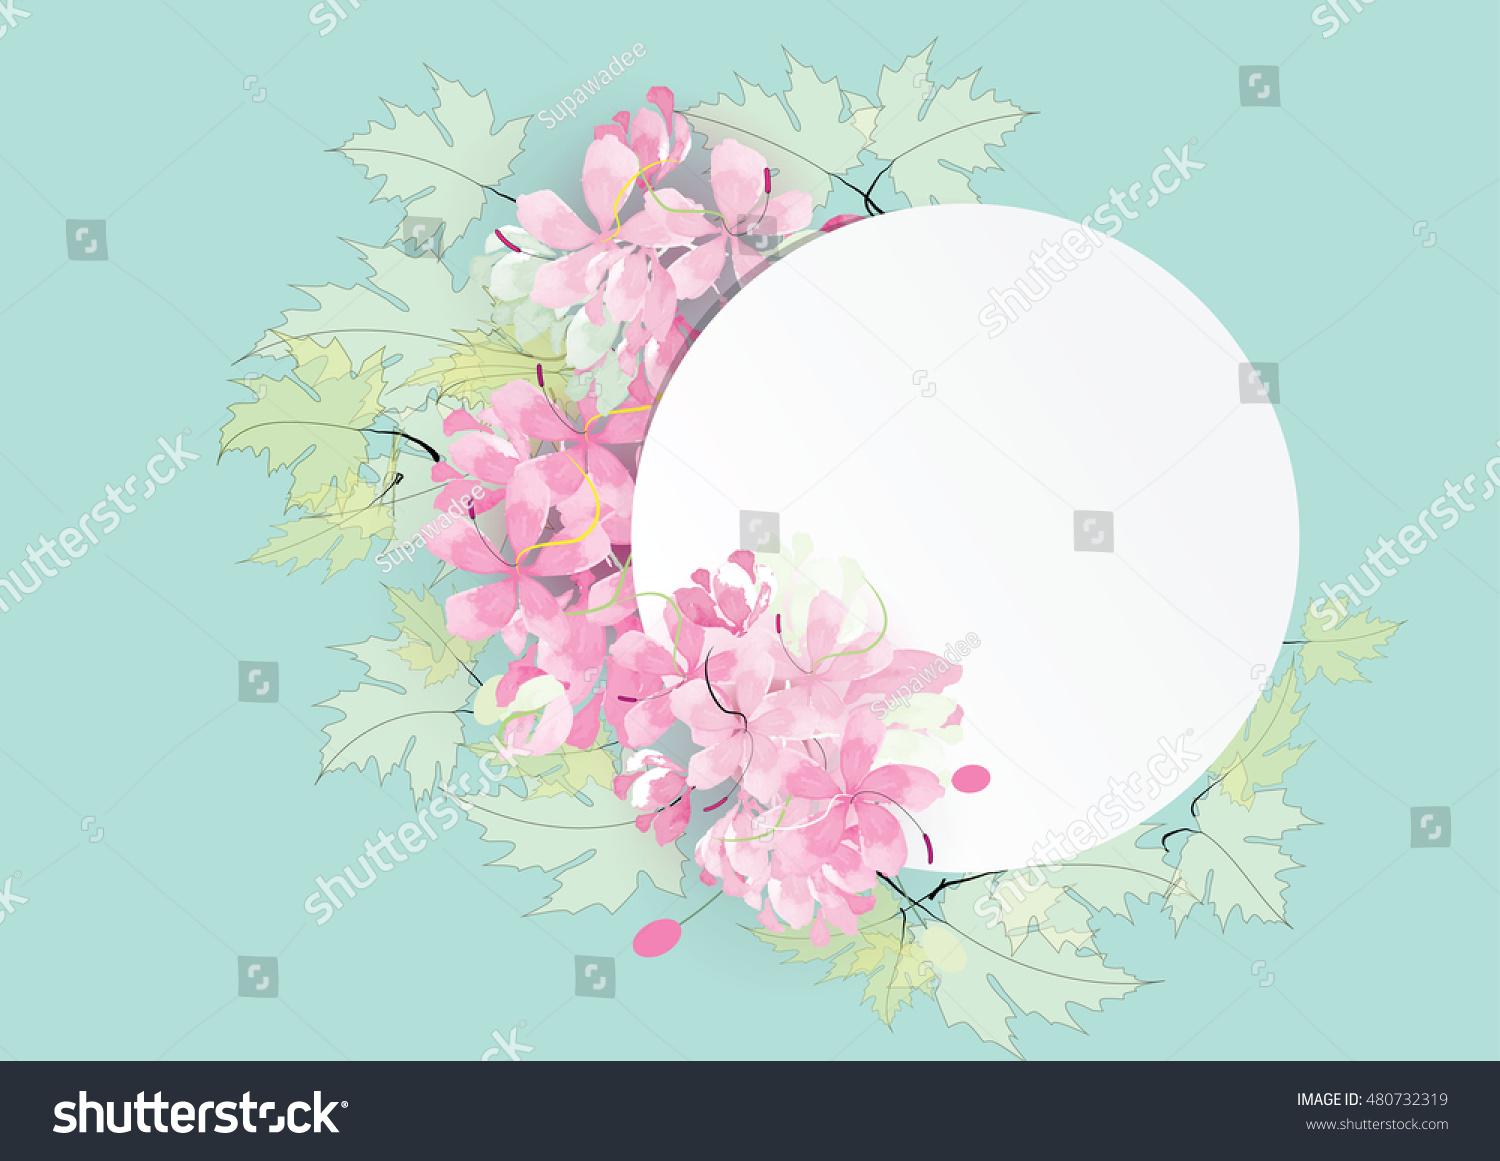 Edit Vectors Free Online - pink flowers | Shutterstock Editor